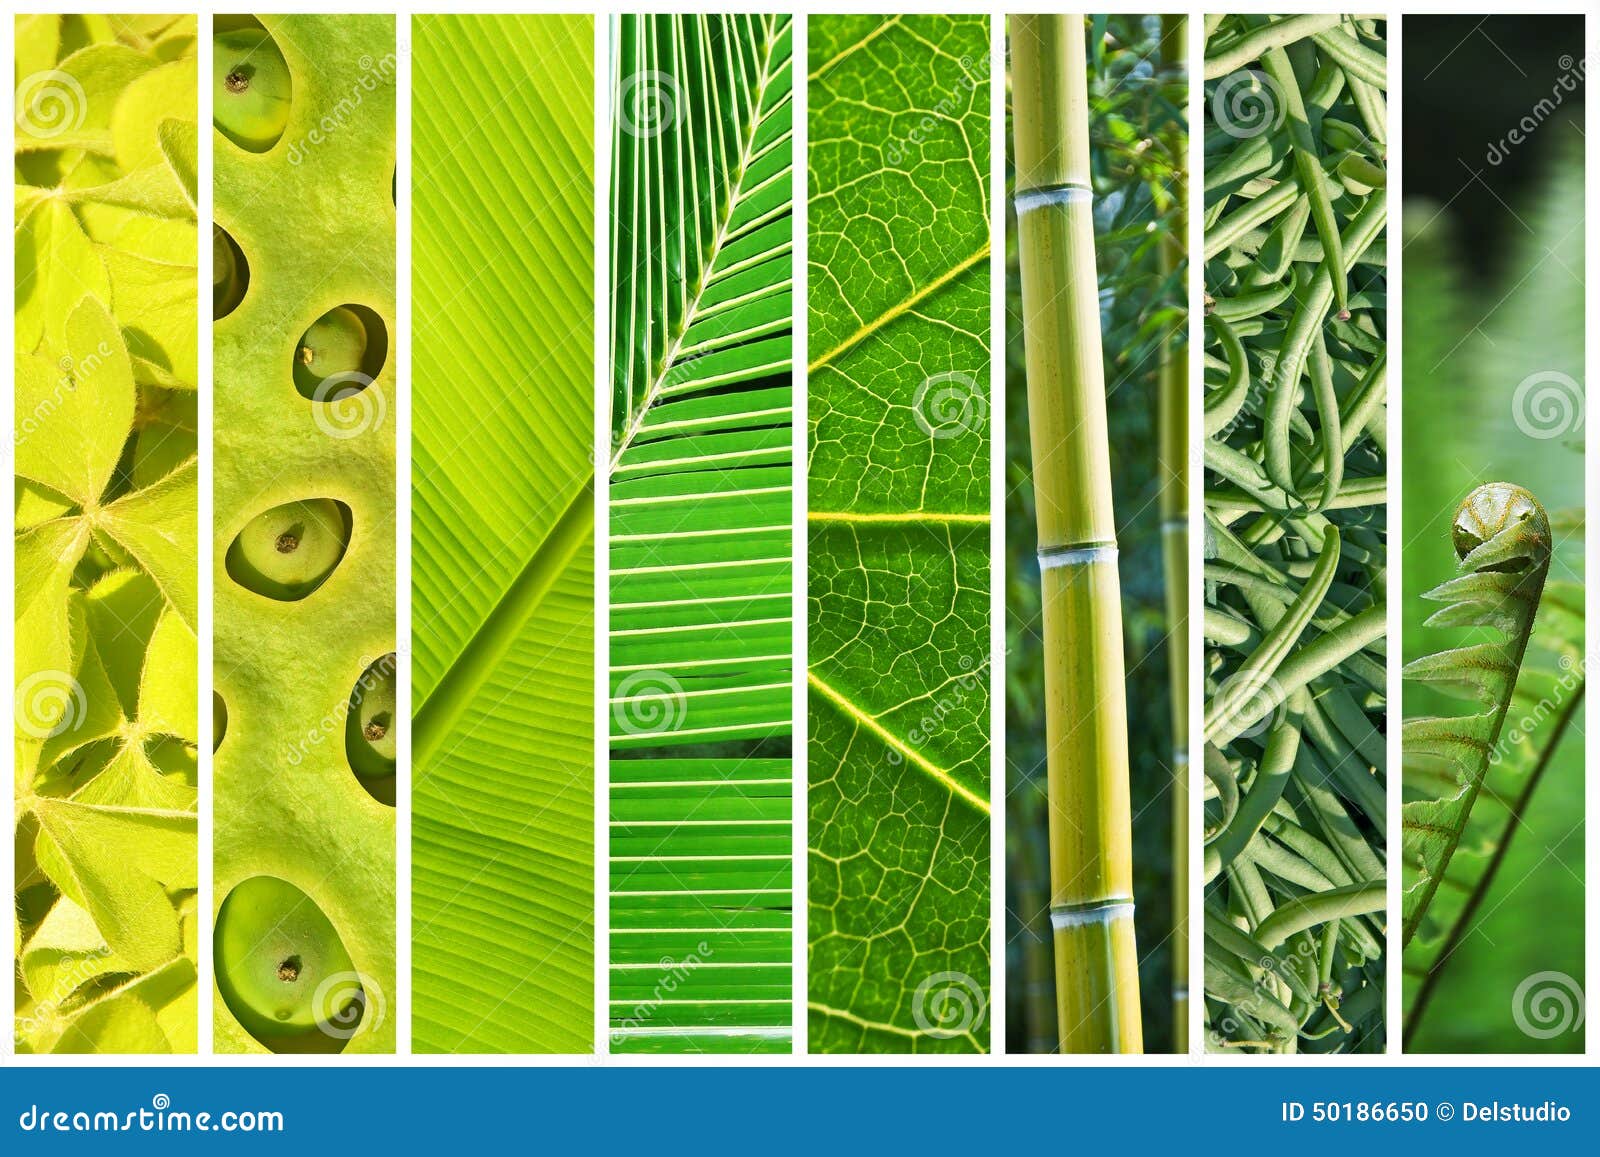 vegetal green gradation collage